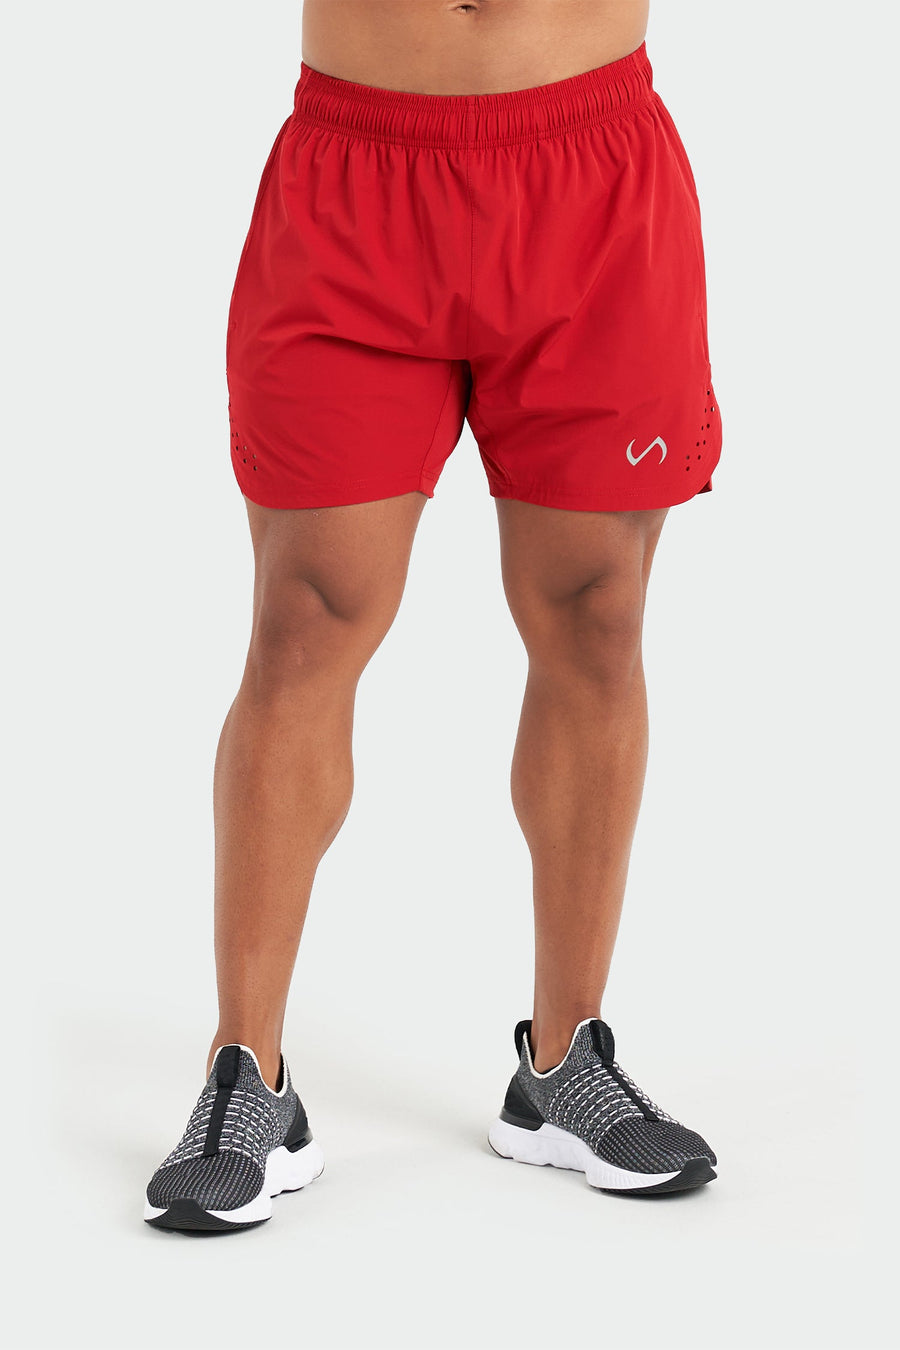 TLF Element 5” Shorts - Men’s 5 Inch inseam Shorts - Red - 1